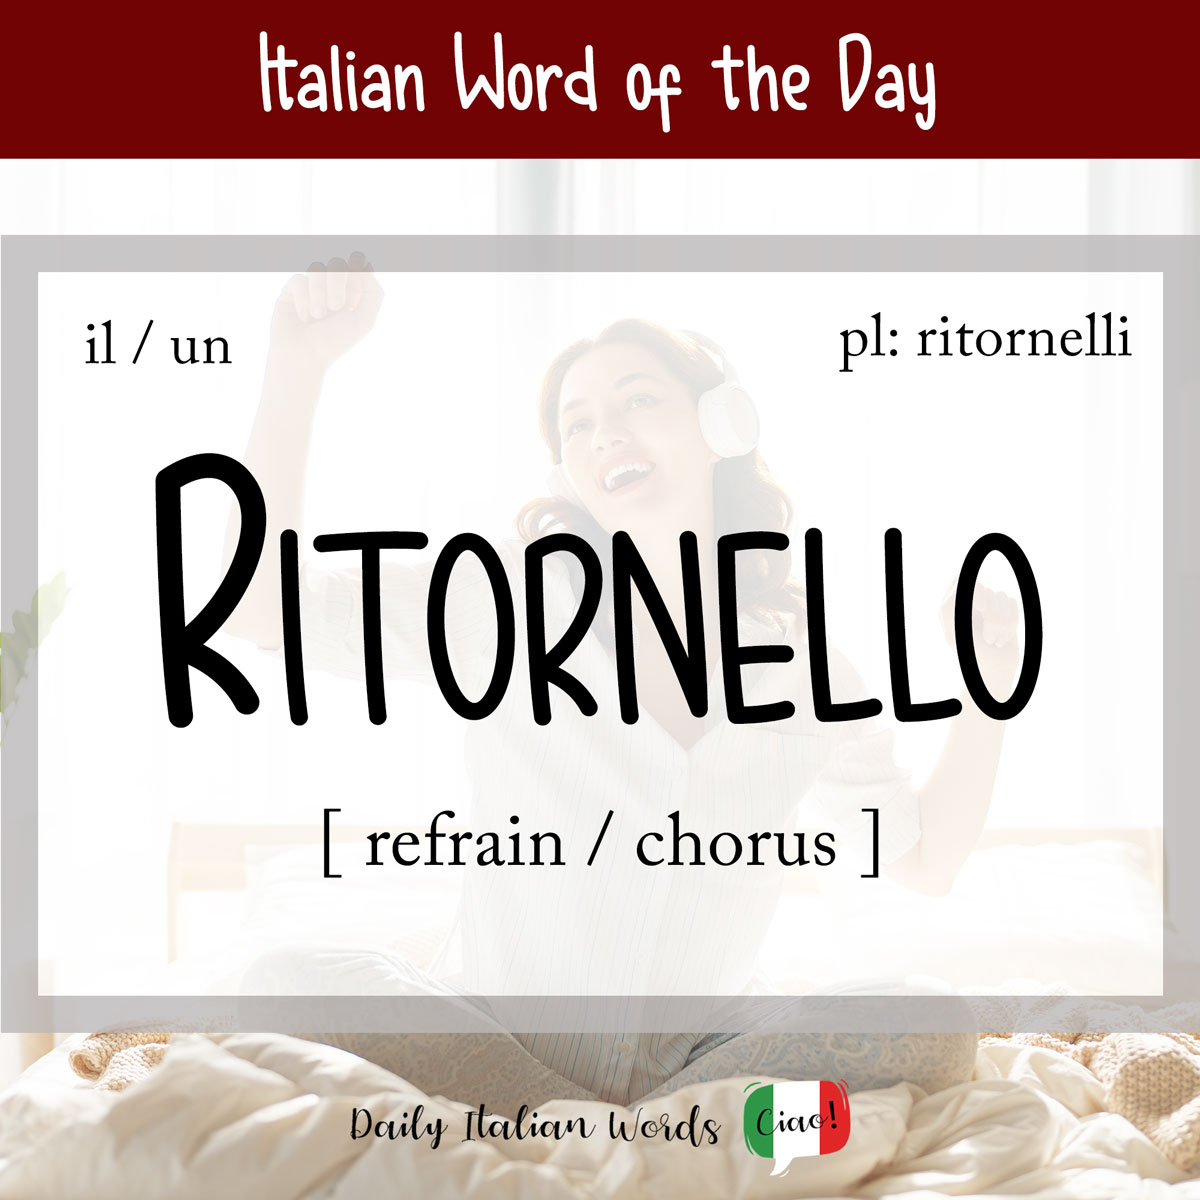 Italian vocabulary of the day: Ritornello (chorus/chorus)